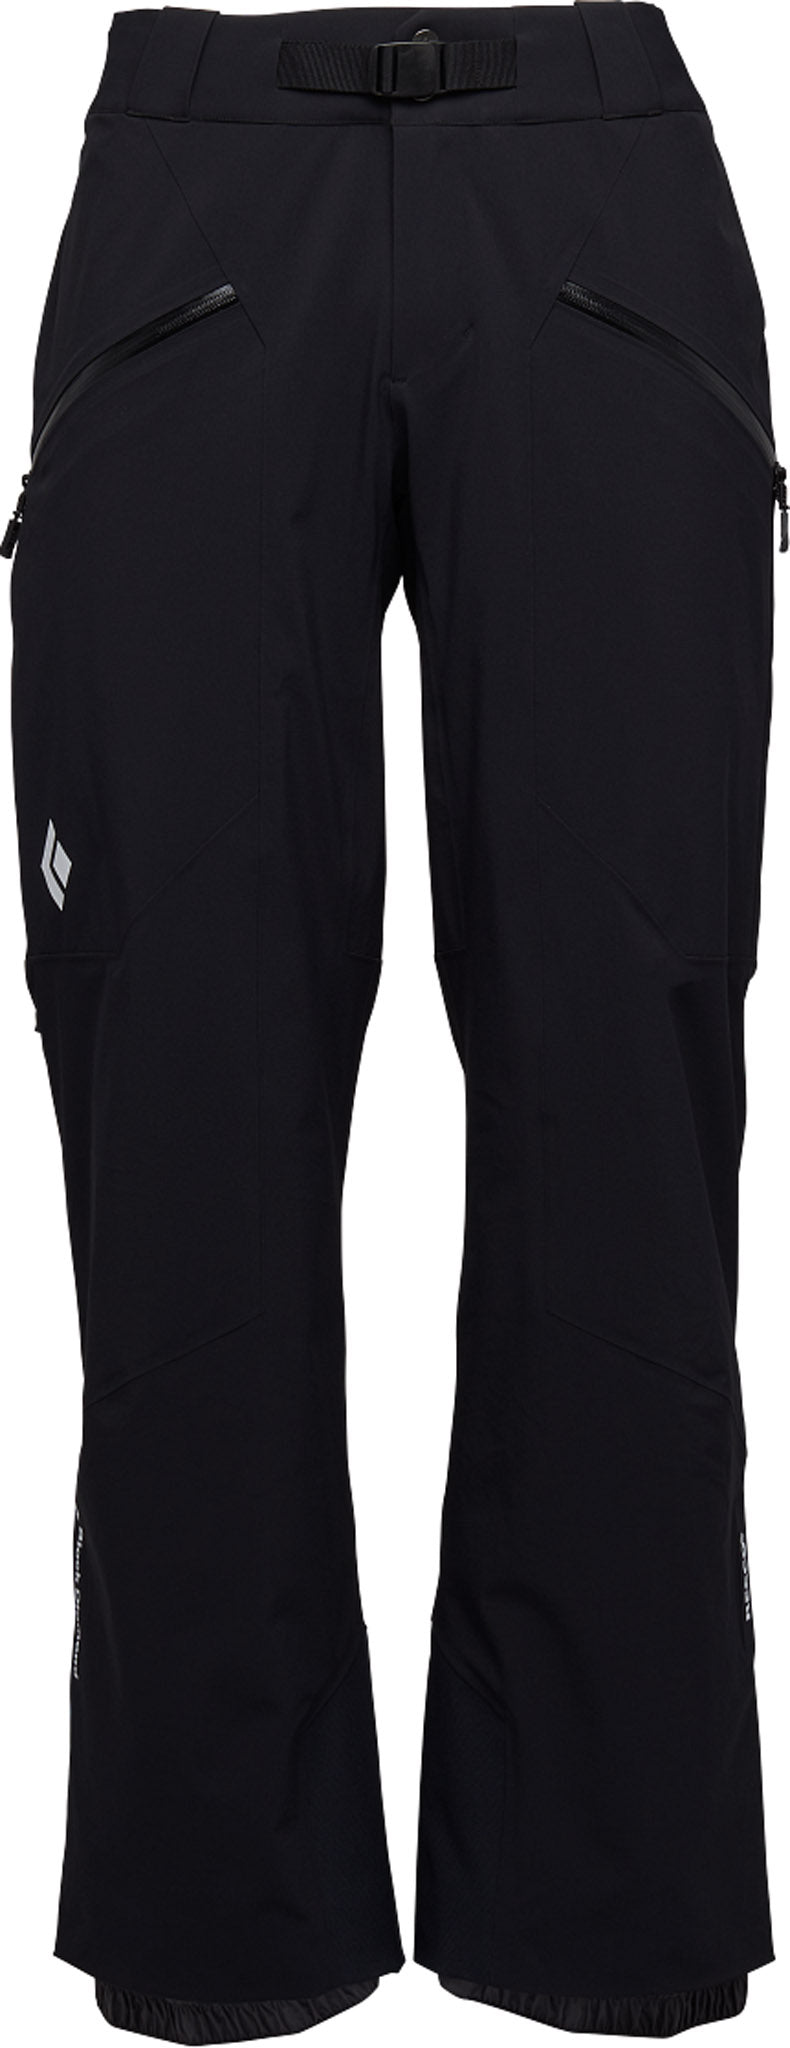 Black Diamond Recon Insulated Pants - Men's | Altitude Sports